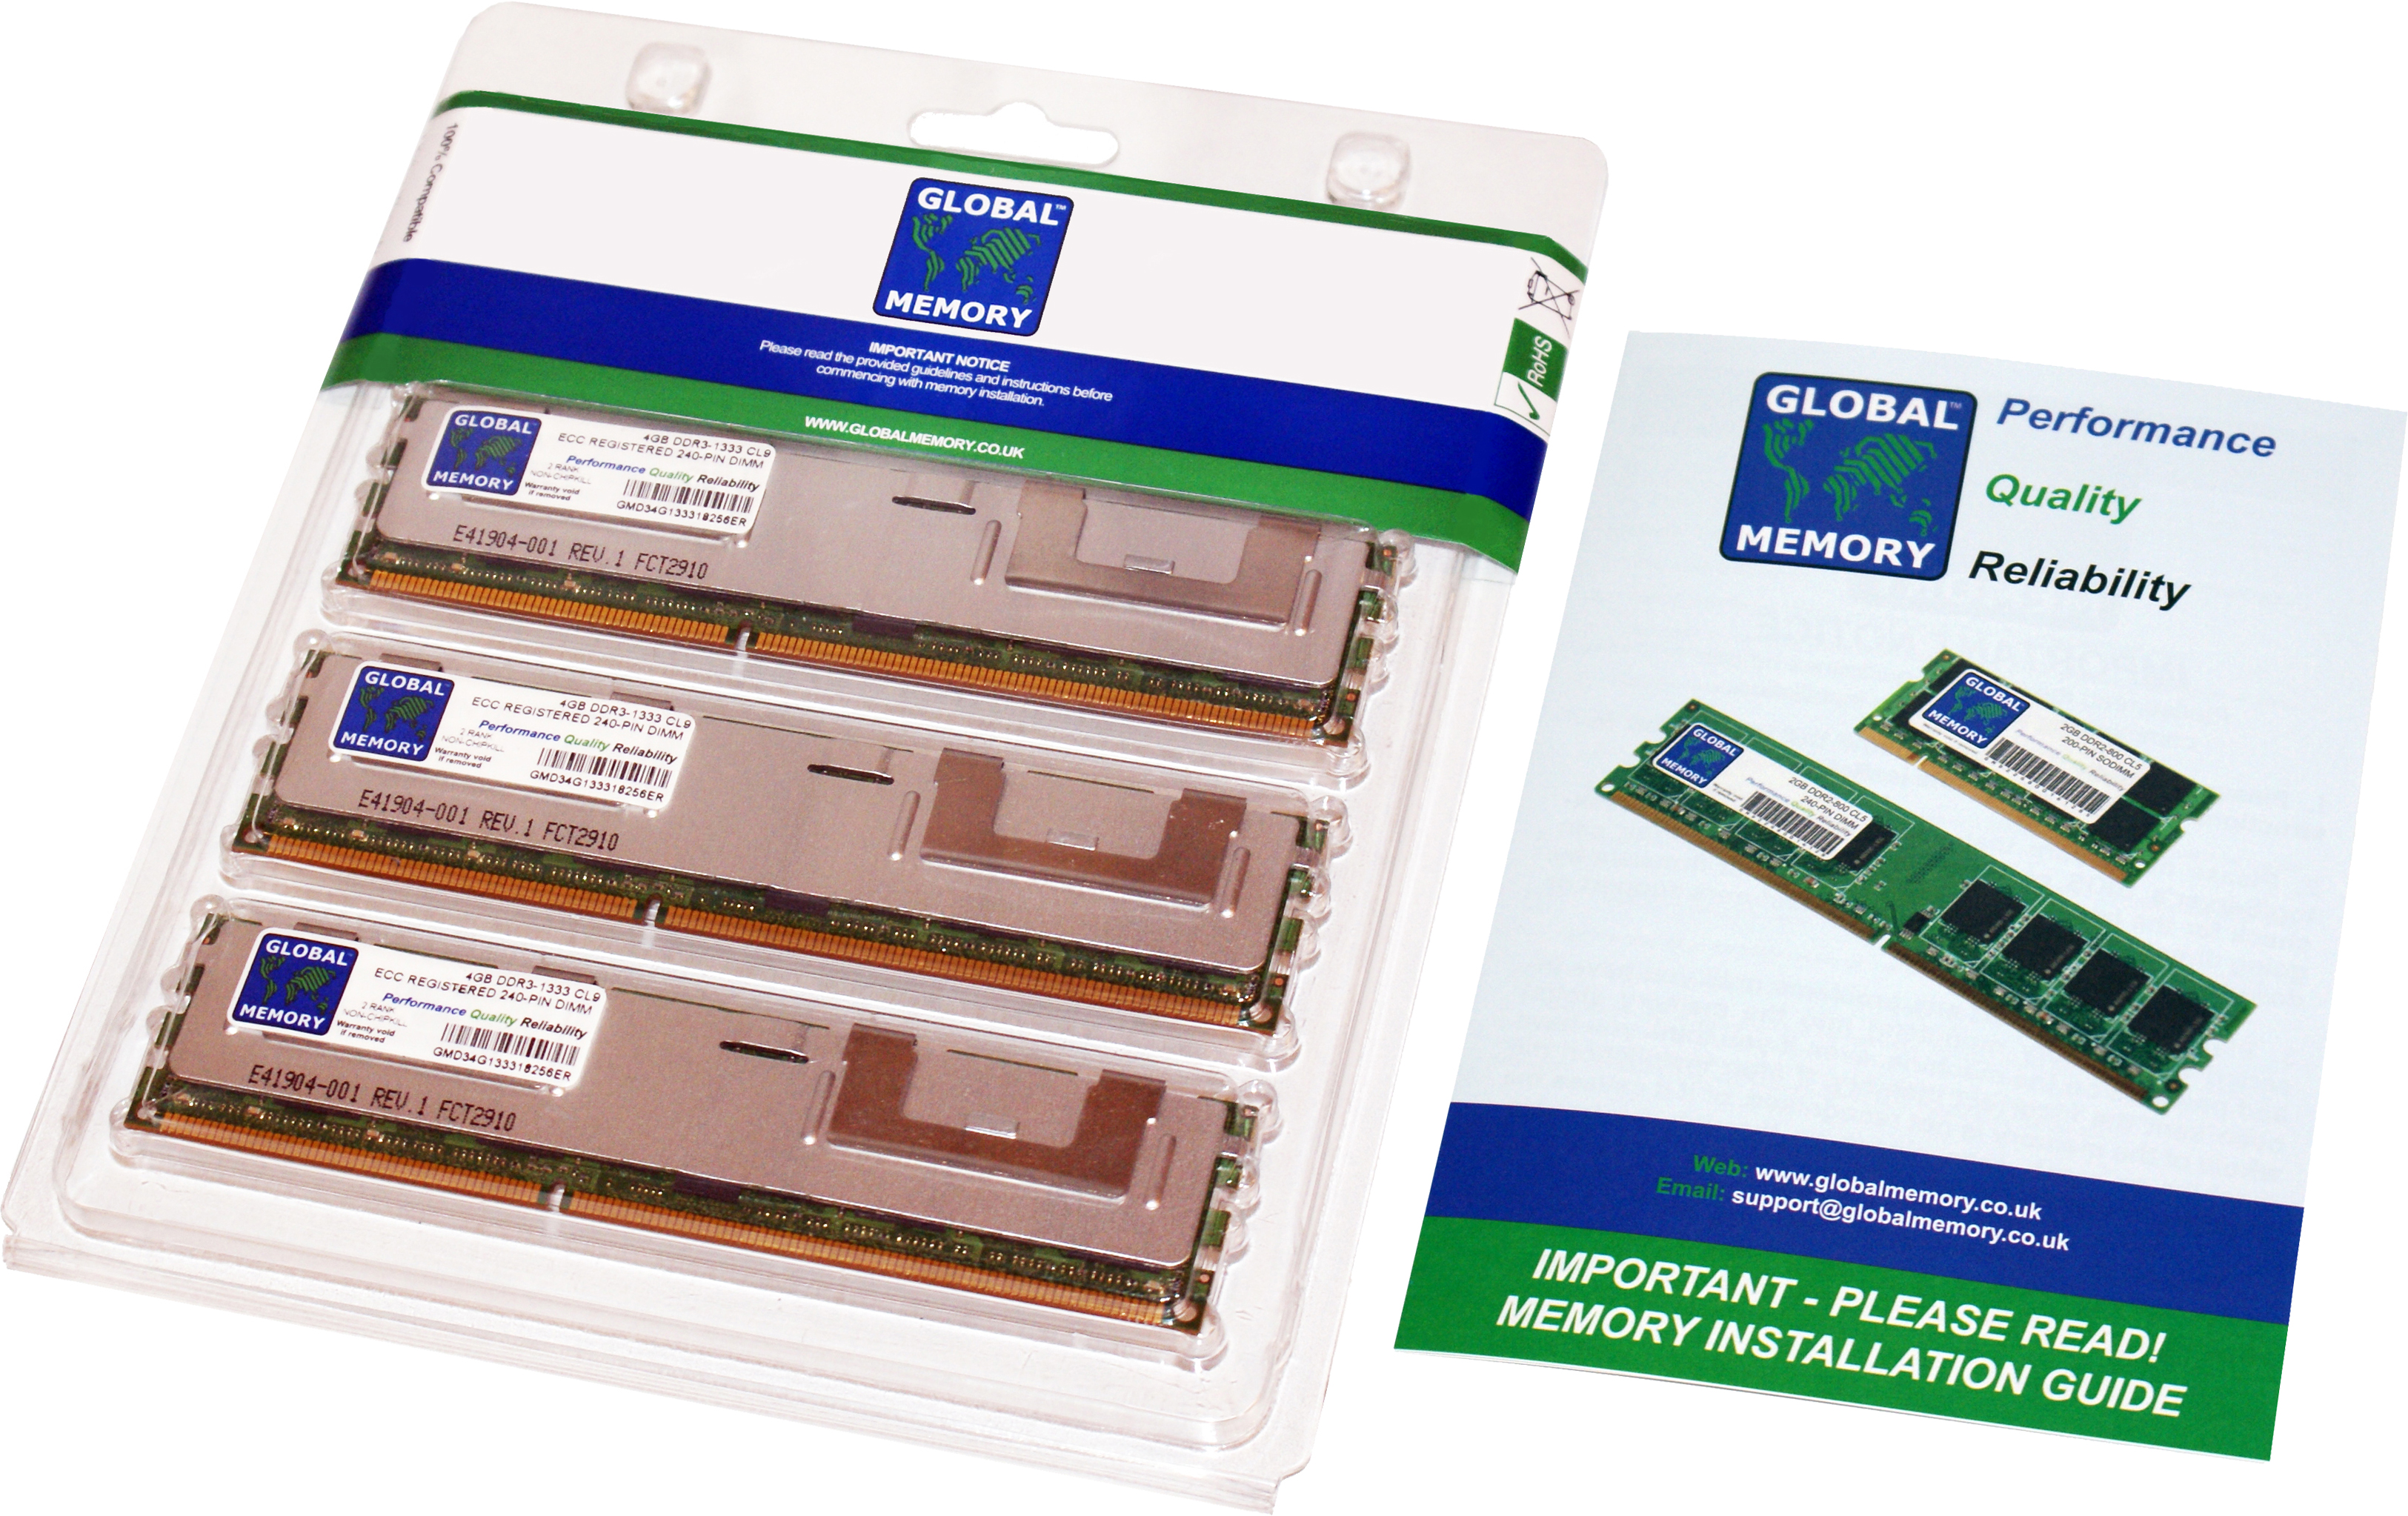 48GB (3 x 16GB) DDR3 1066MHz PC3-8500 240-PIN ECC REGISTERED DIMM (RDIMM) MEMORY RAM KIT FOR SUN SERVERS/WORKSTATIONS (12 RANK KIT NON-CHIPKILL)